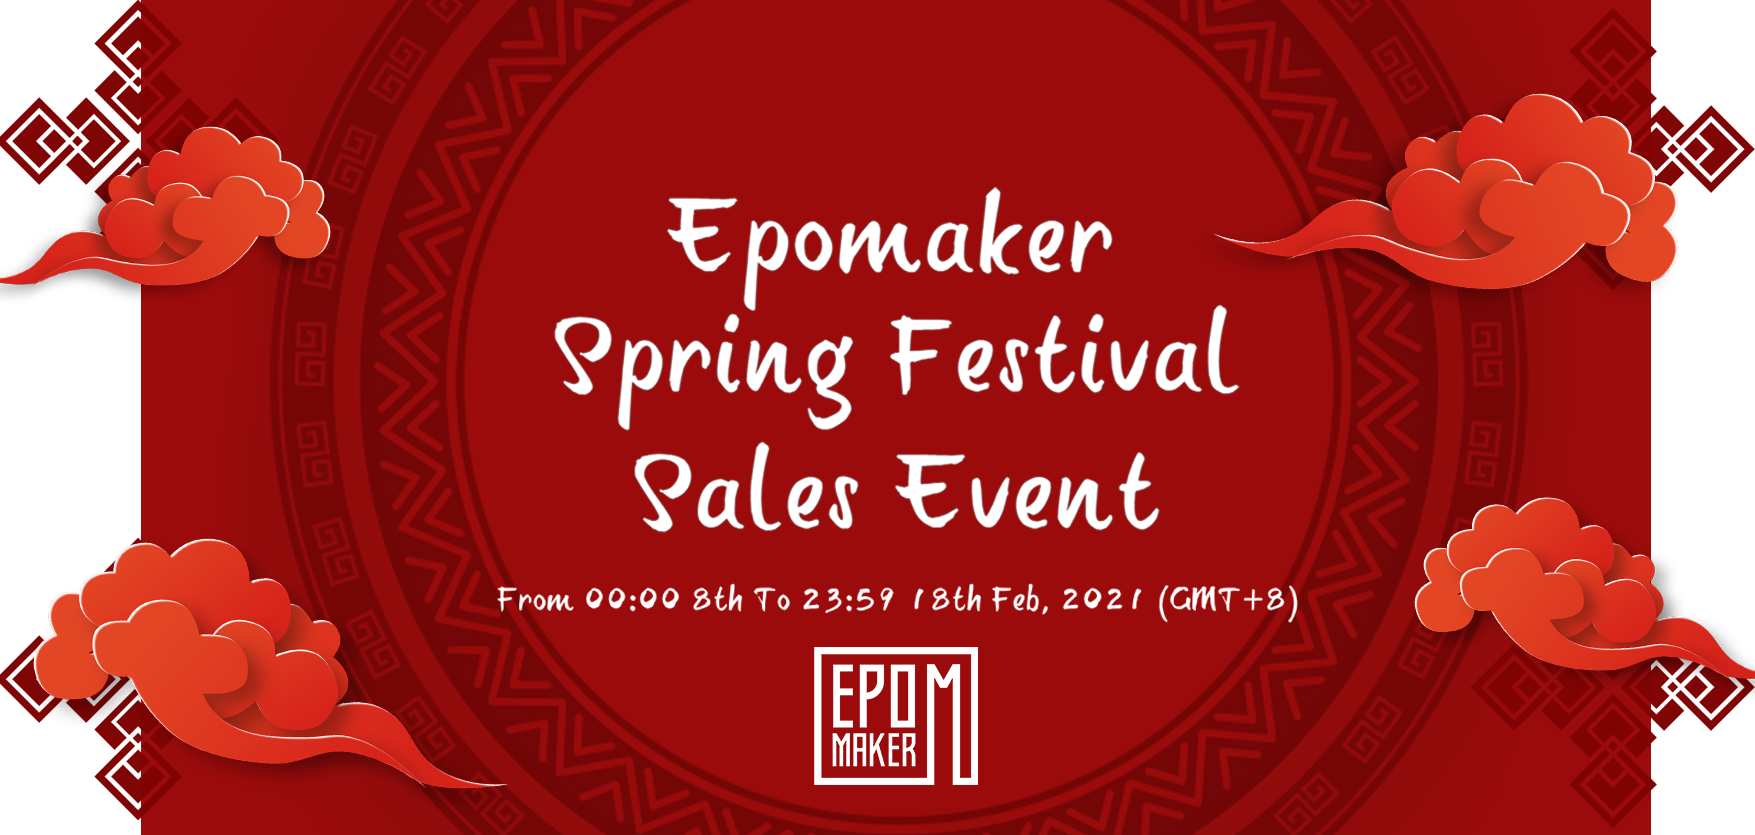 Epomaker Spring Festival Sales Event Announcement